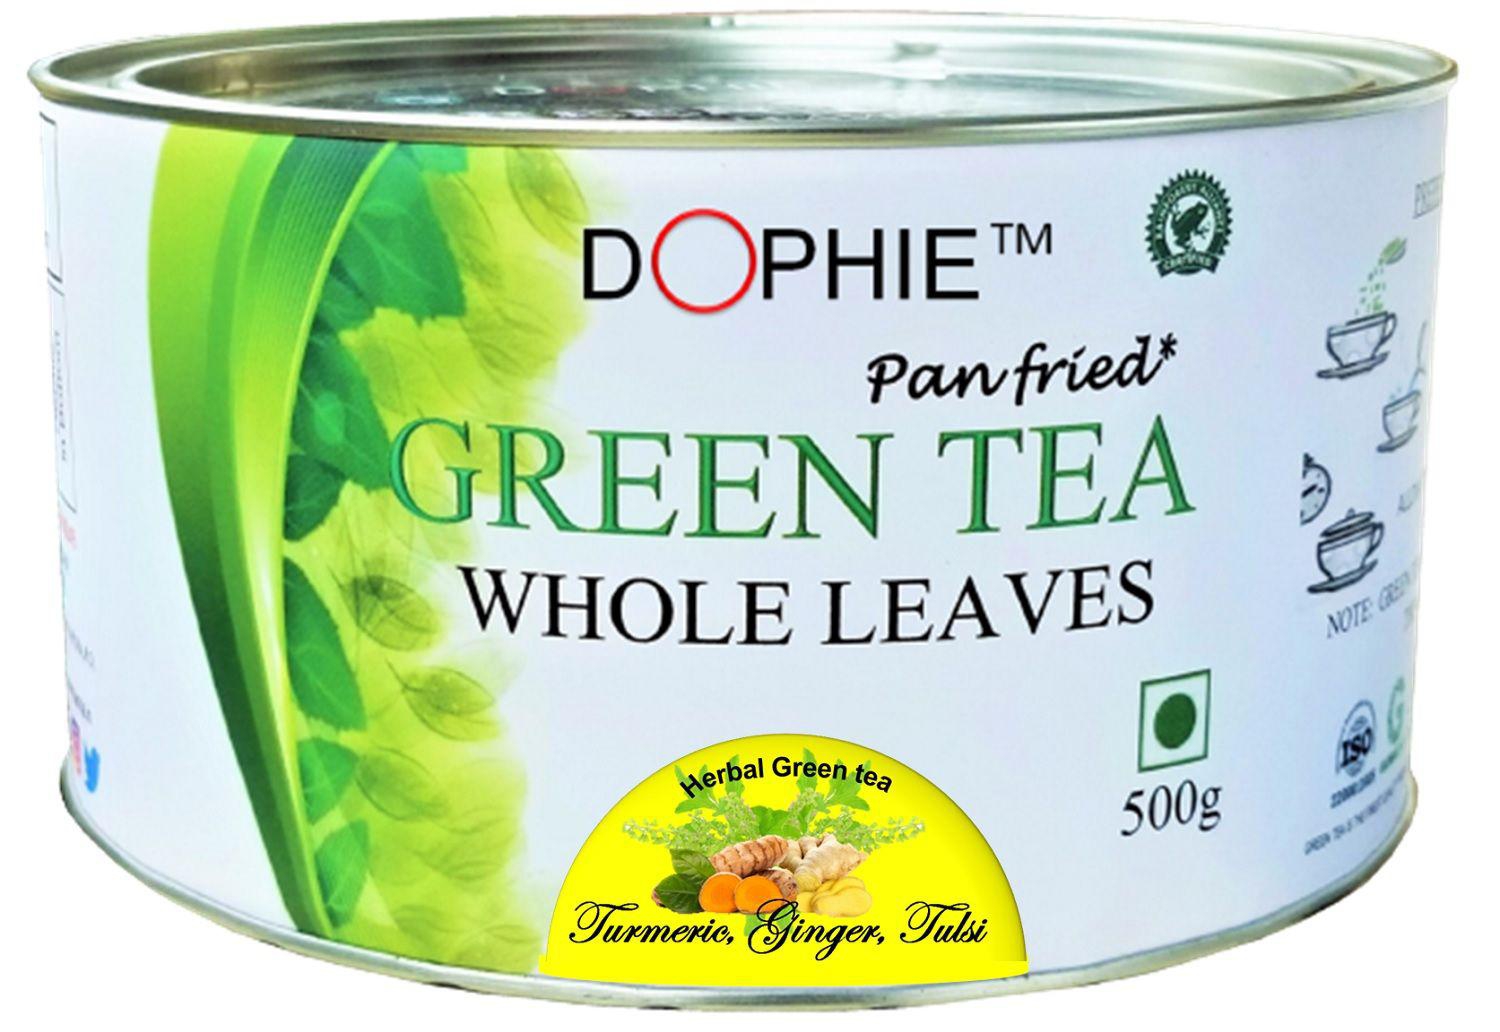 Dophie Turmeric,Ginger , Tulsi Green tea  Whole leaves 500g